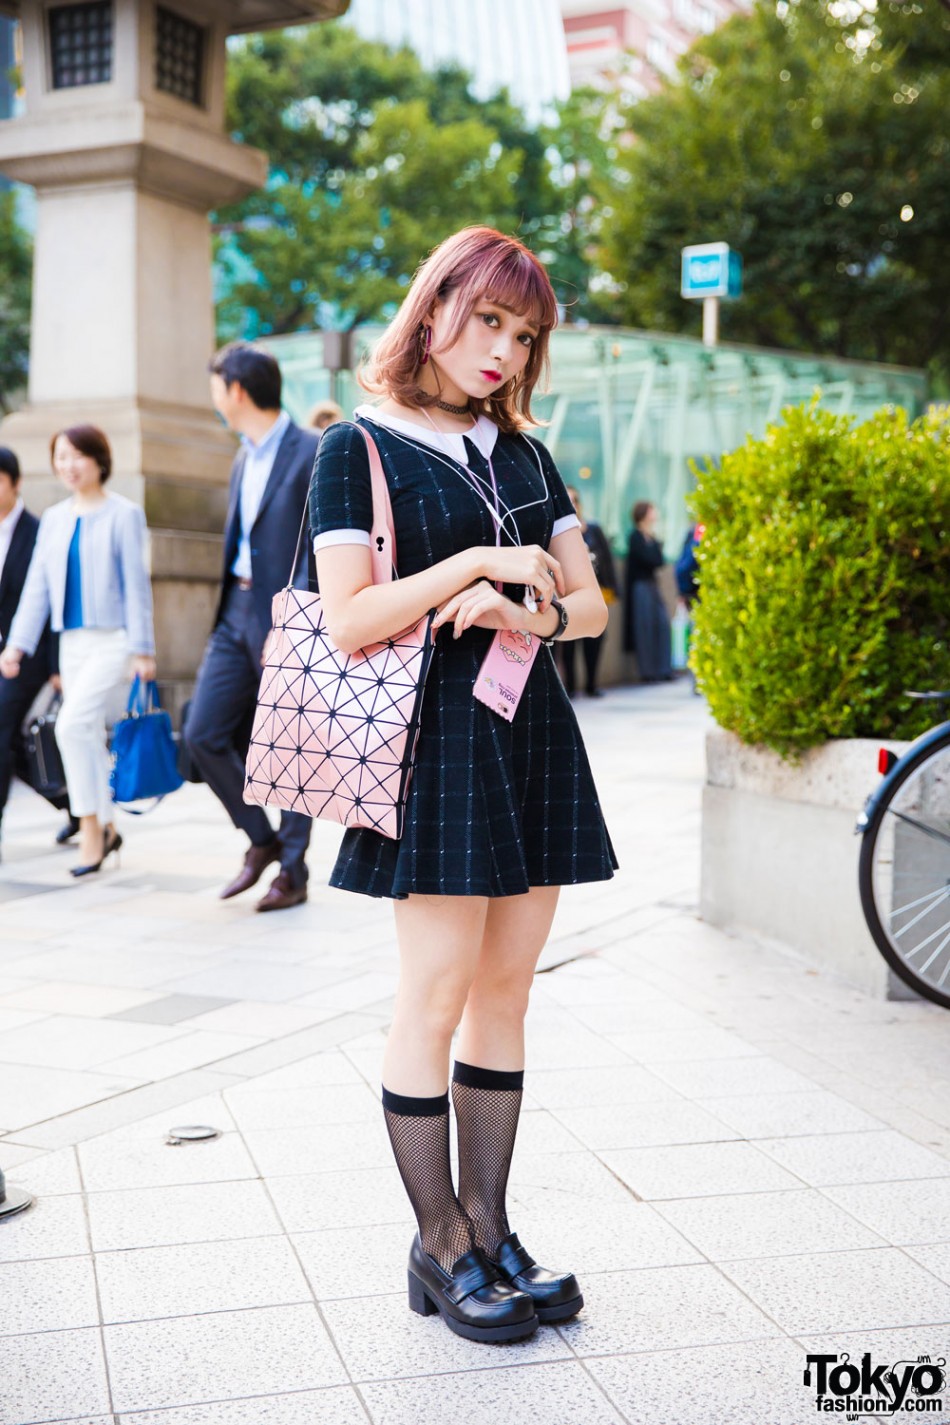 Harajuku Girl w/ Pink Hair in Peter Pan Dress & Spinns Accessories ...